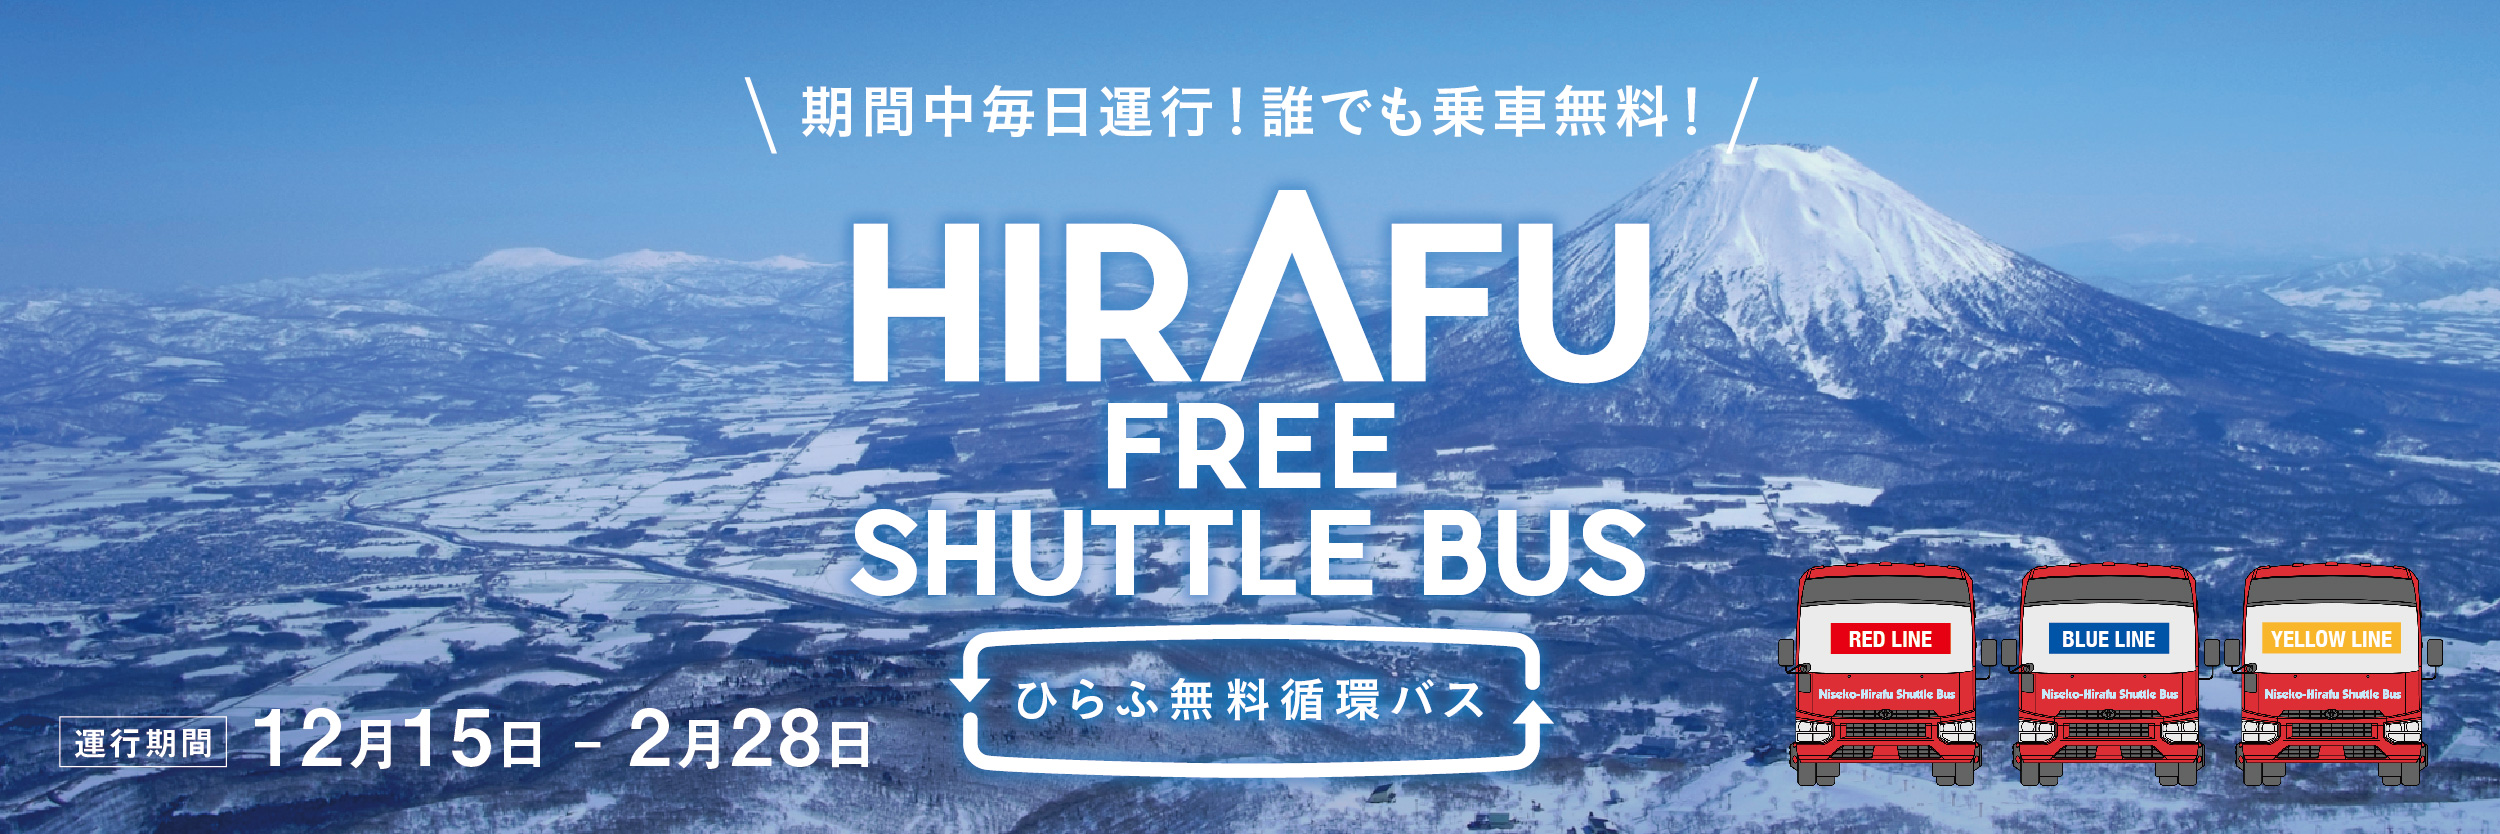 HIRAFU FREE SHUTTLE BUS ひらふ無料循環バス